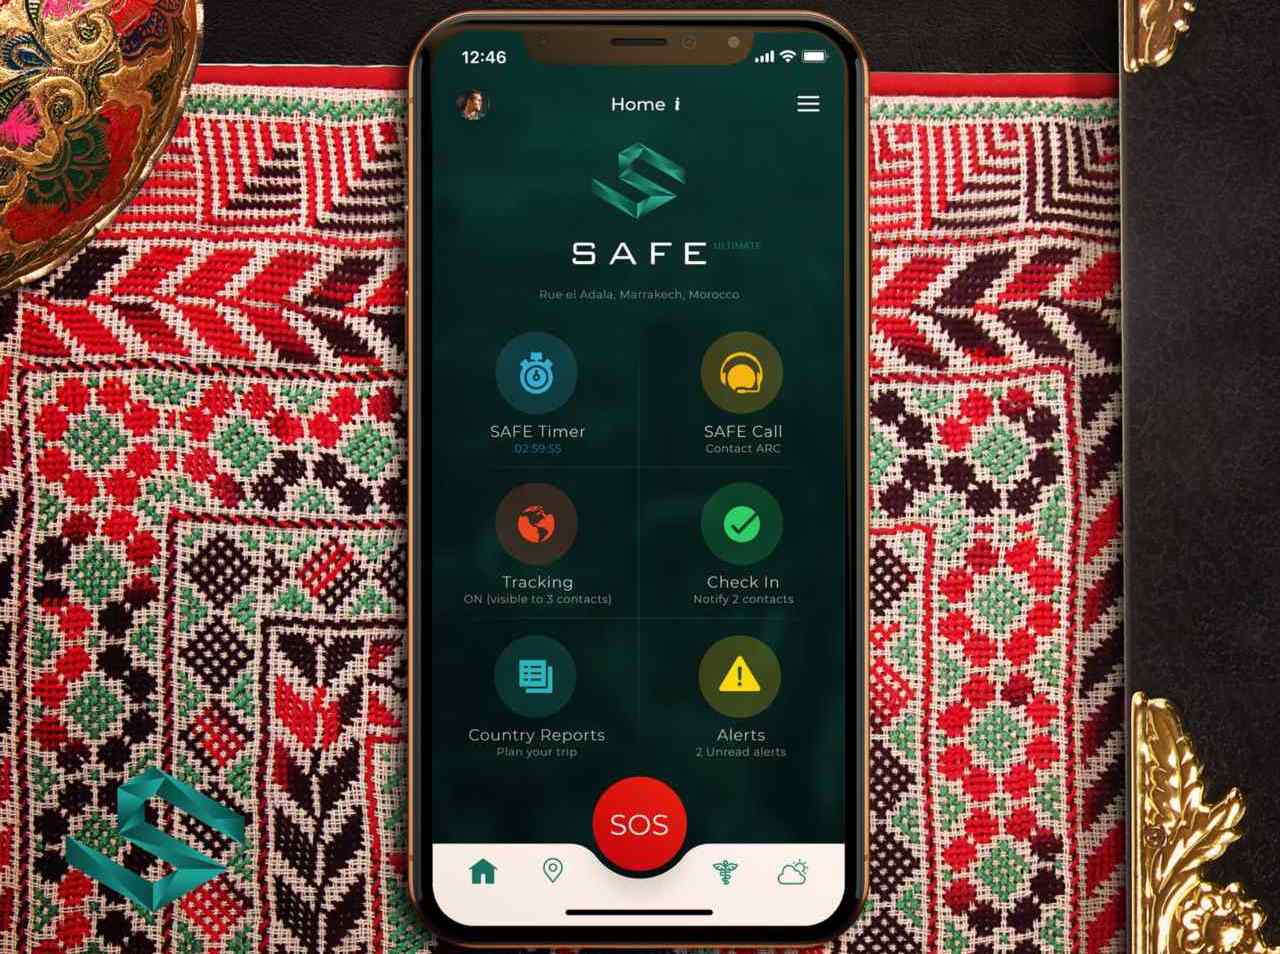 SAFE App interface